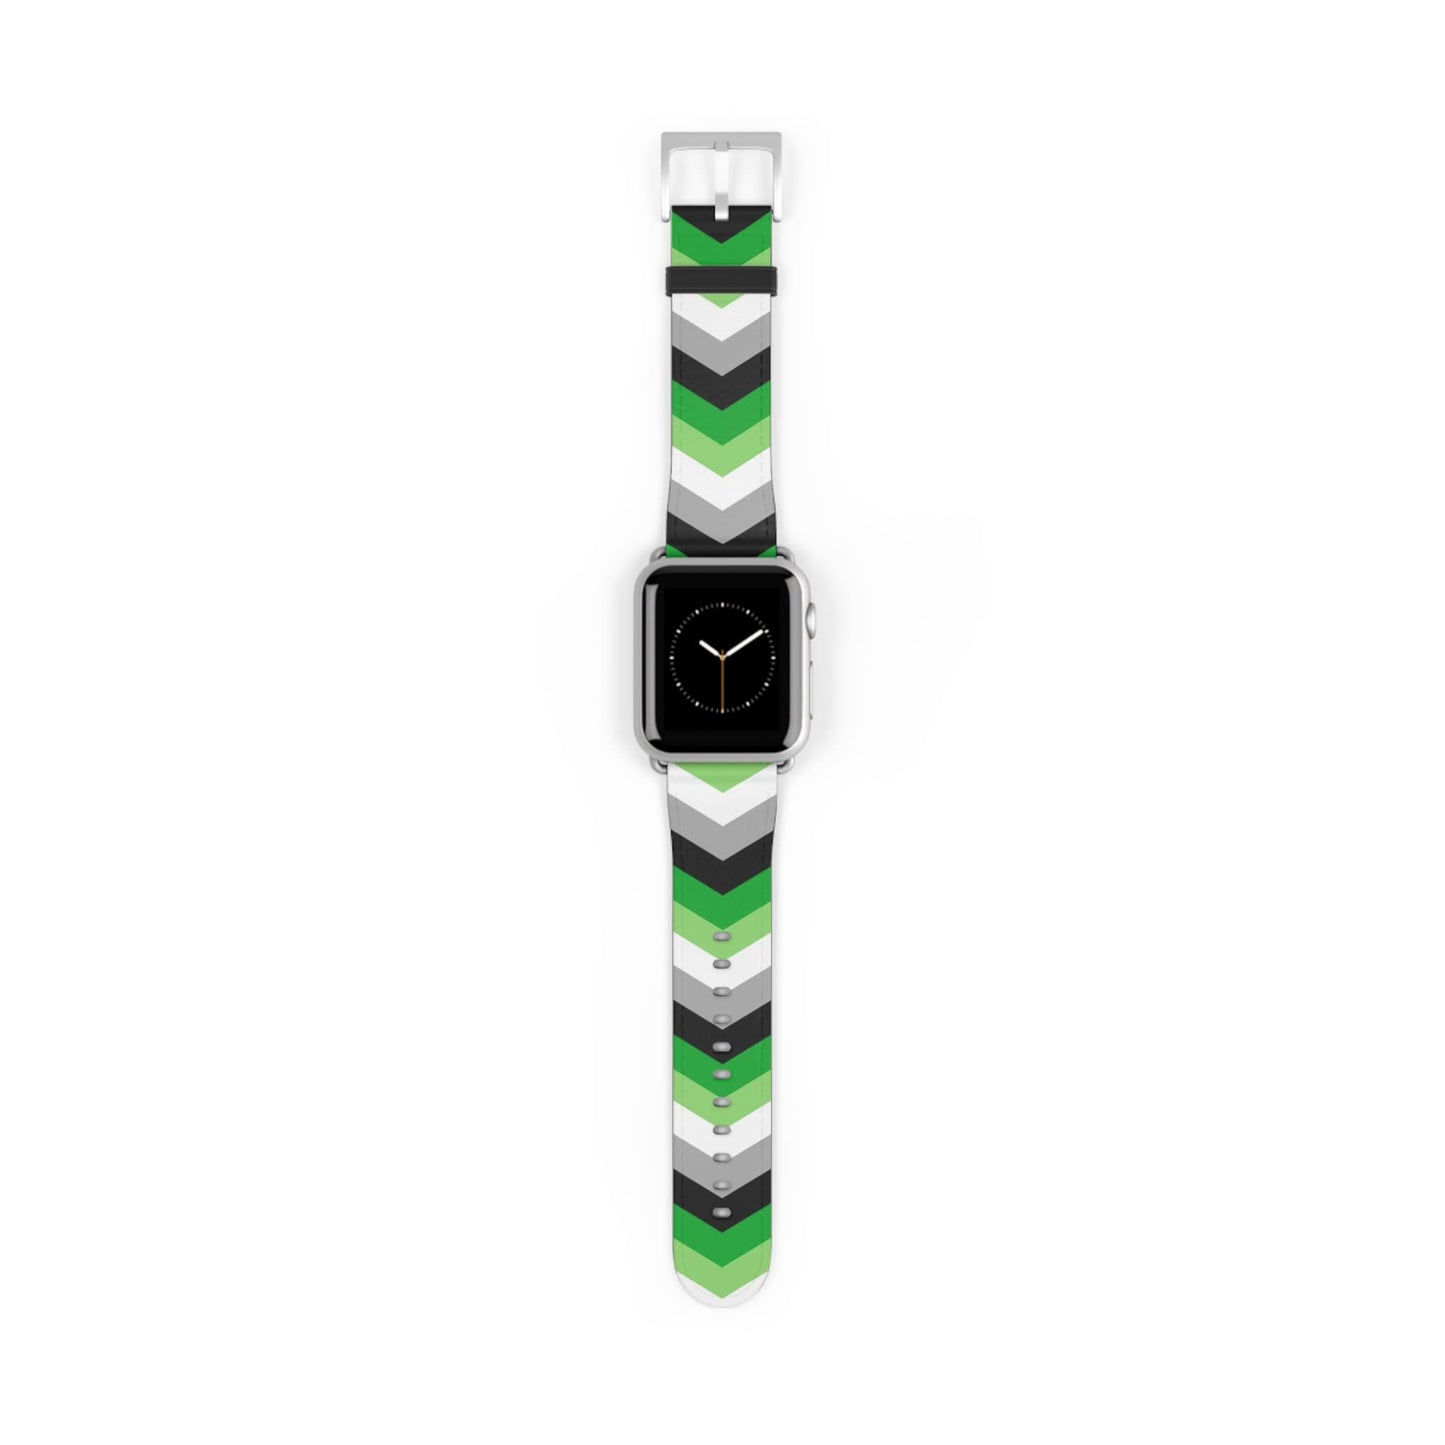 aromantic apple watch band, discreet chevron pattern, silver